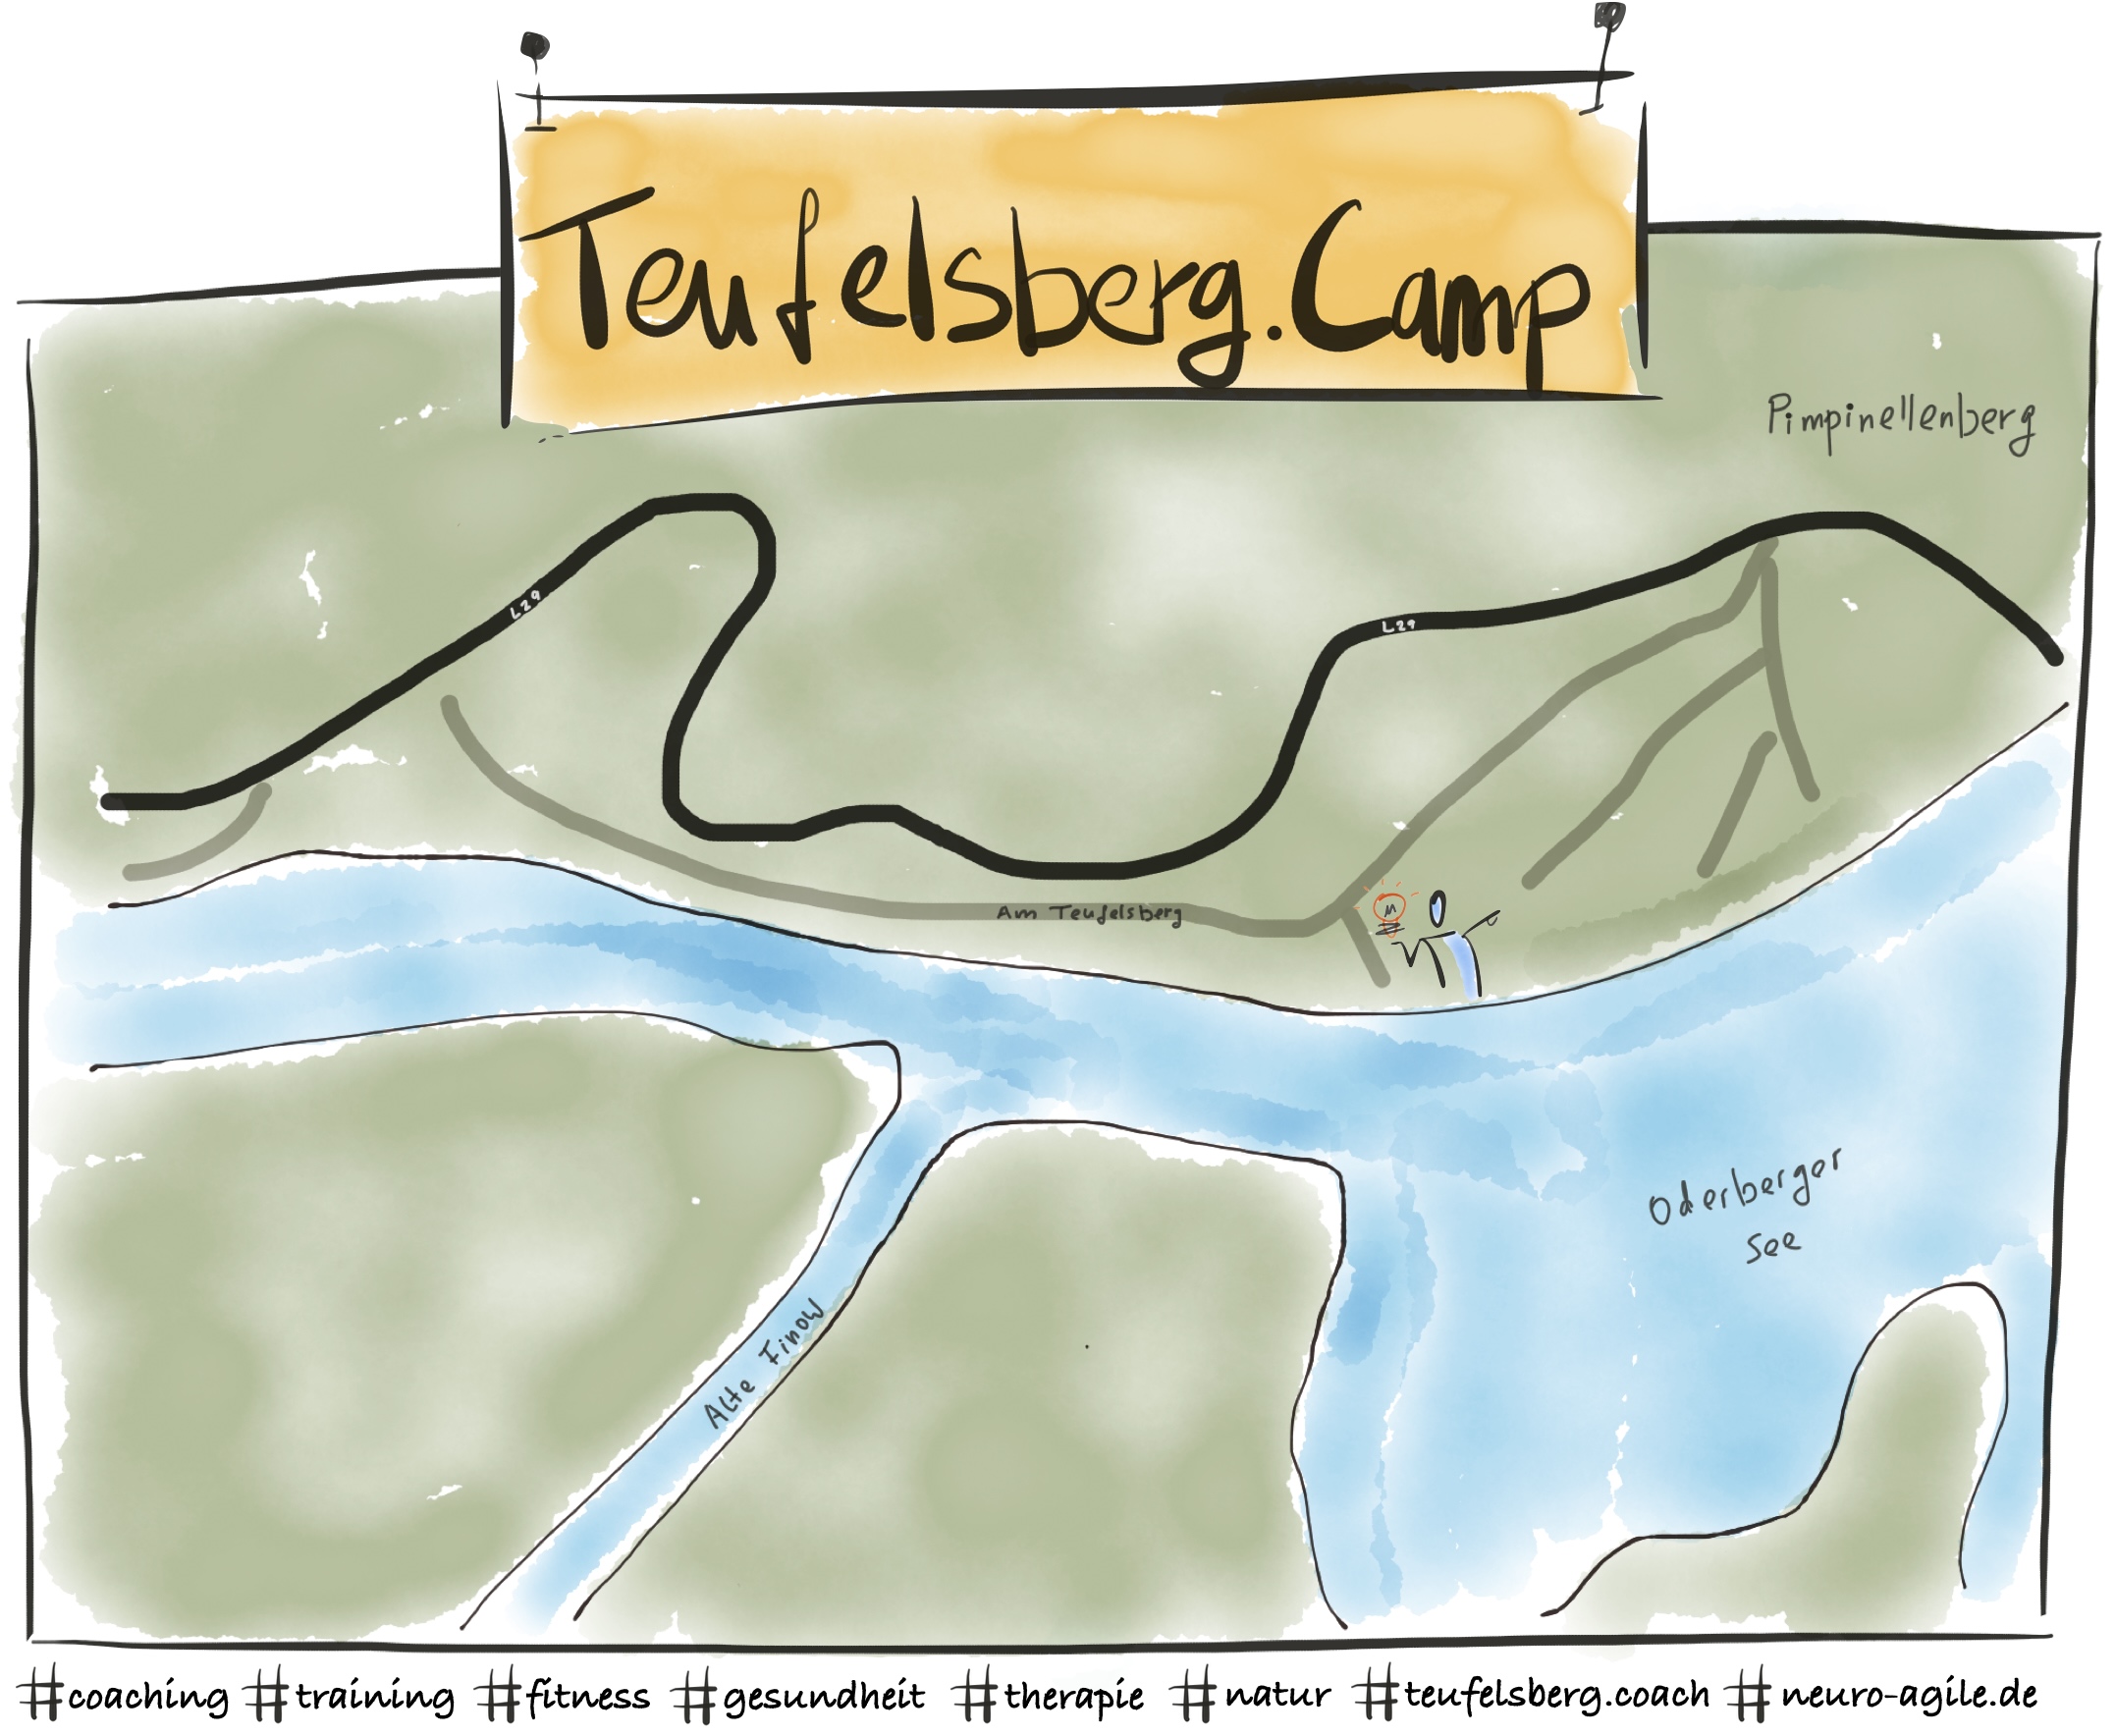 teufelsberg.camp by EMC² | Personal.Coach und NeWork.Coach<br/>